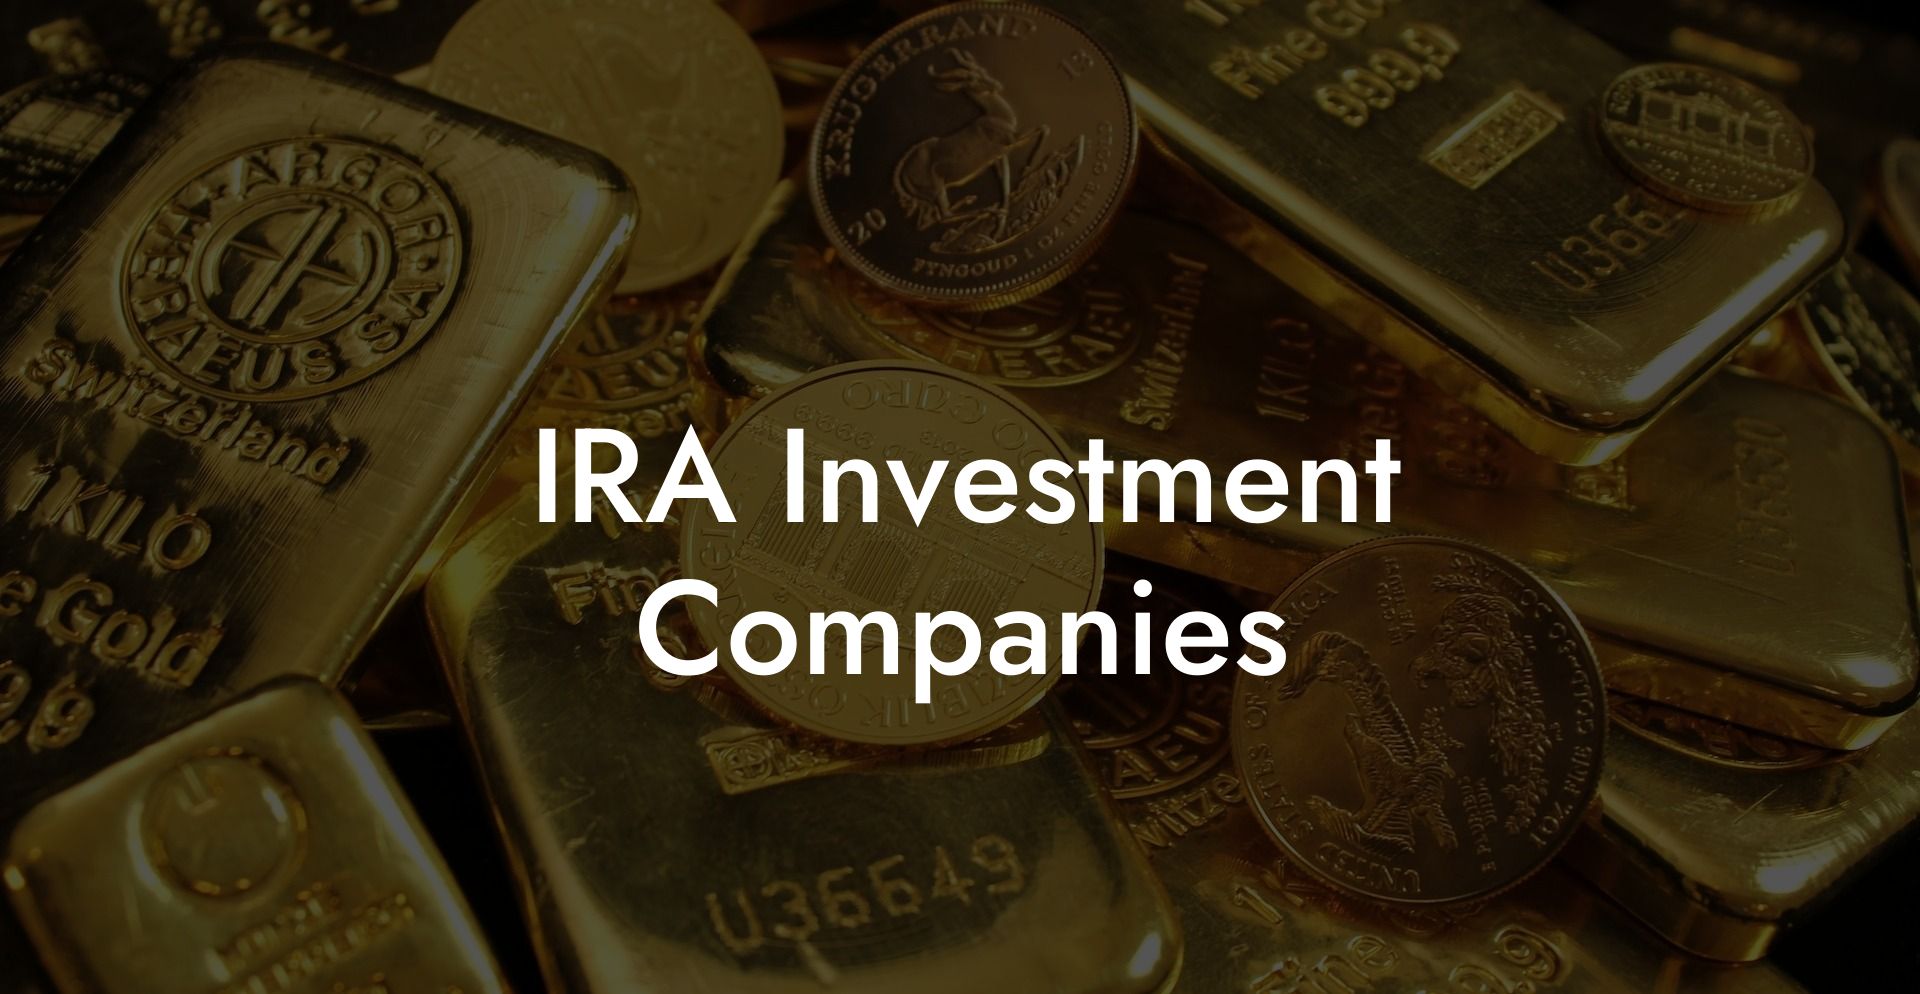 IRA Investment Companies